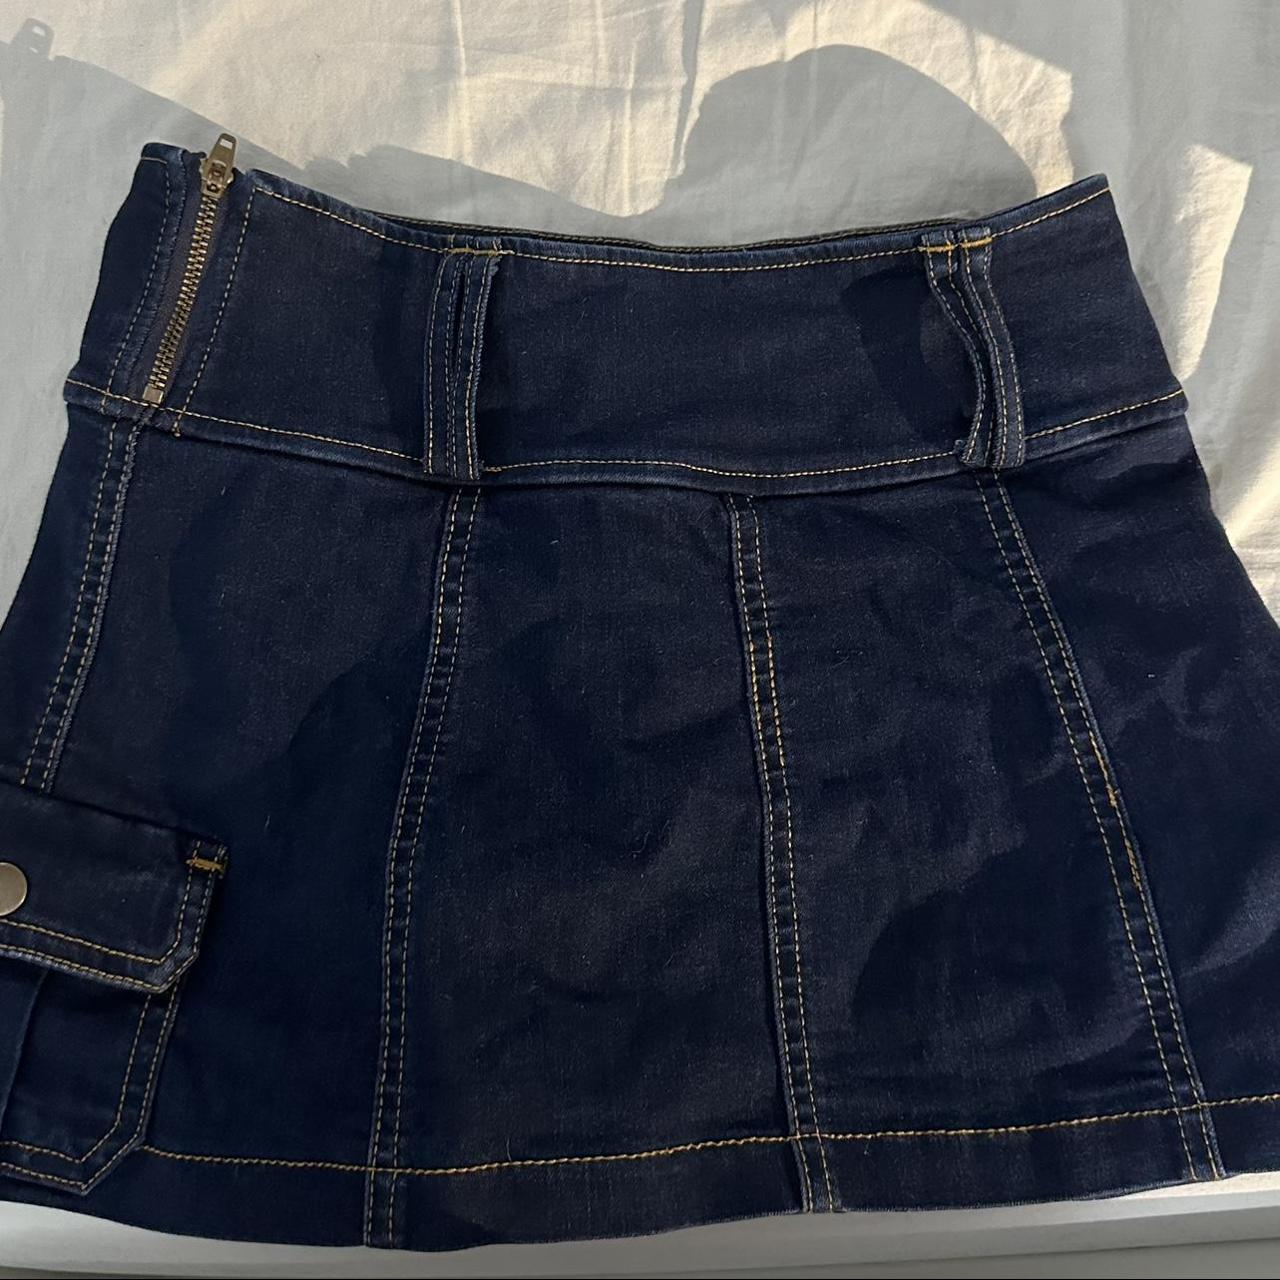 Garage Women's Brown and Navy Skirt (3)